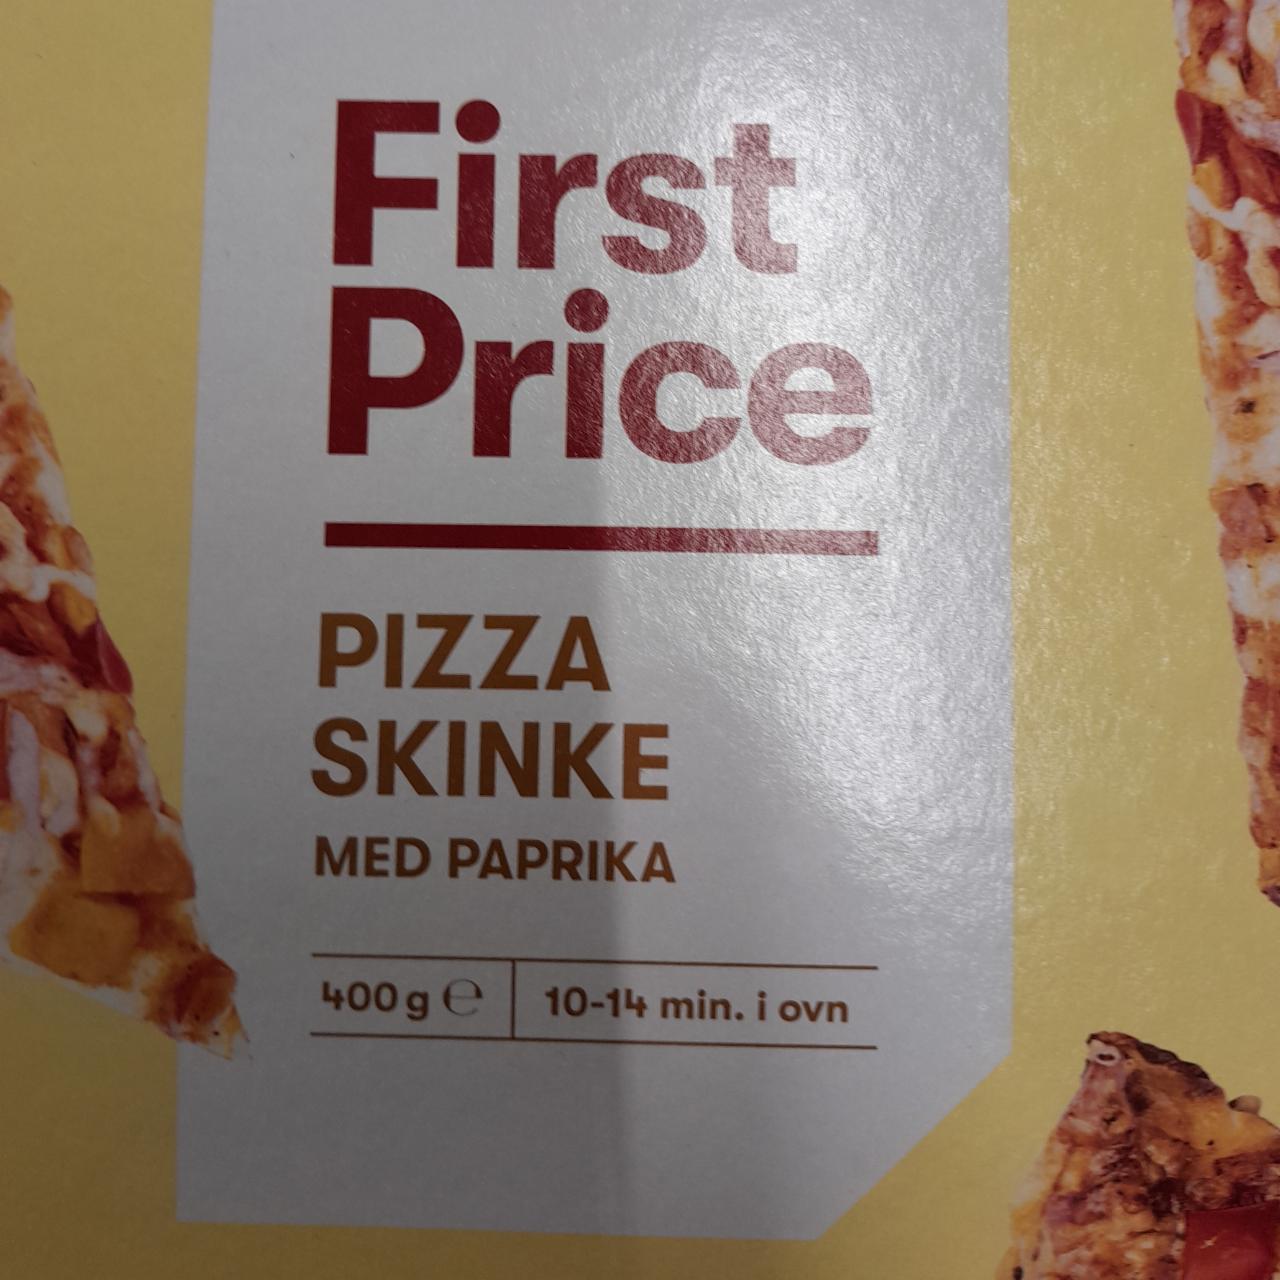 Фото - Pizza skinke med Paprika пицца с шинкой First Price